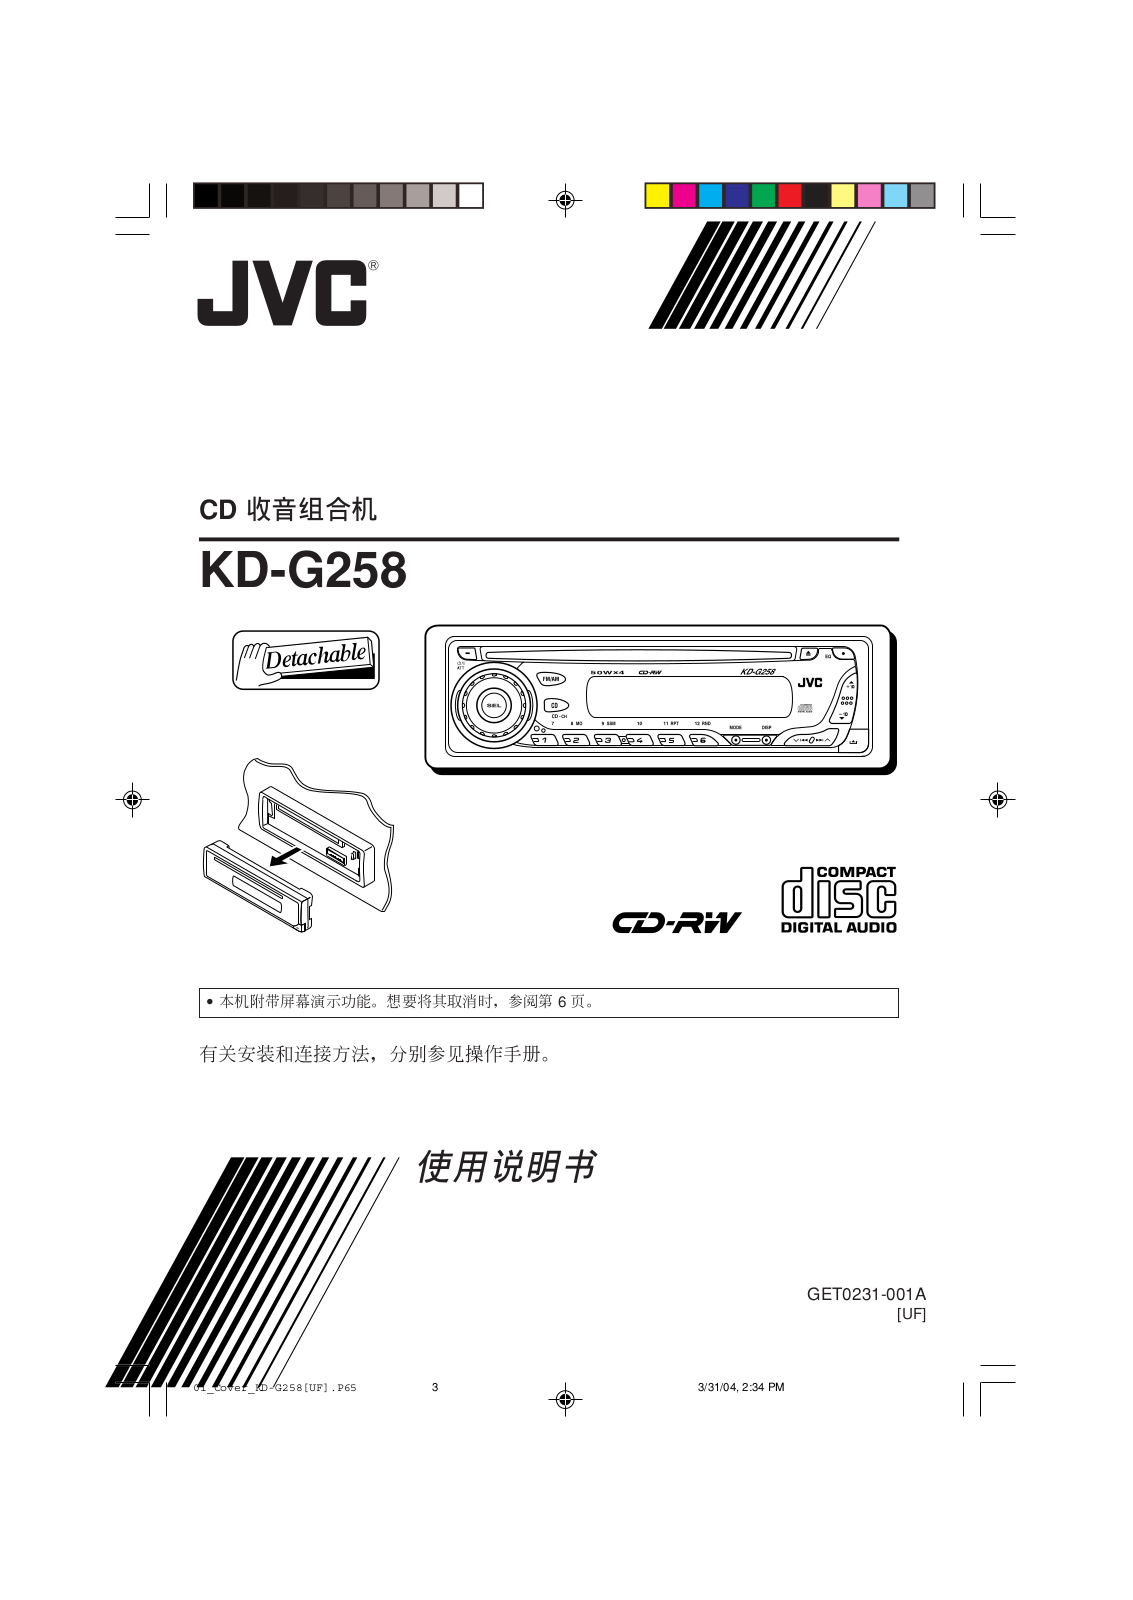 JVC KD-G258 User Manual